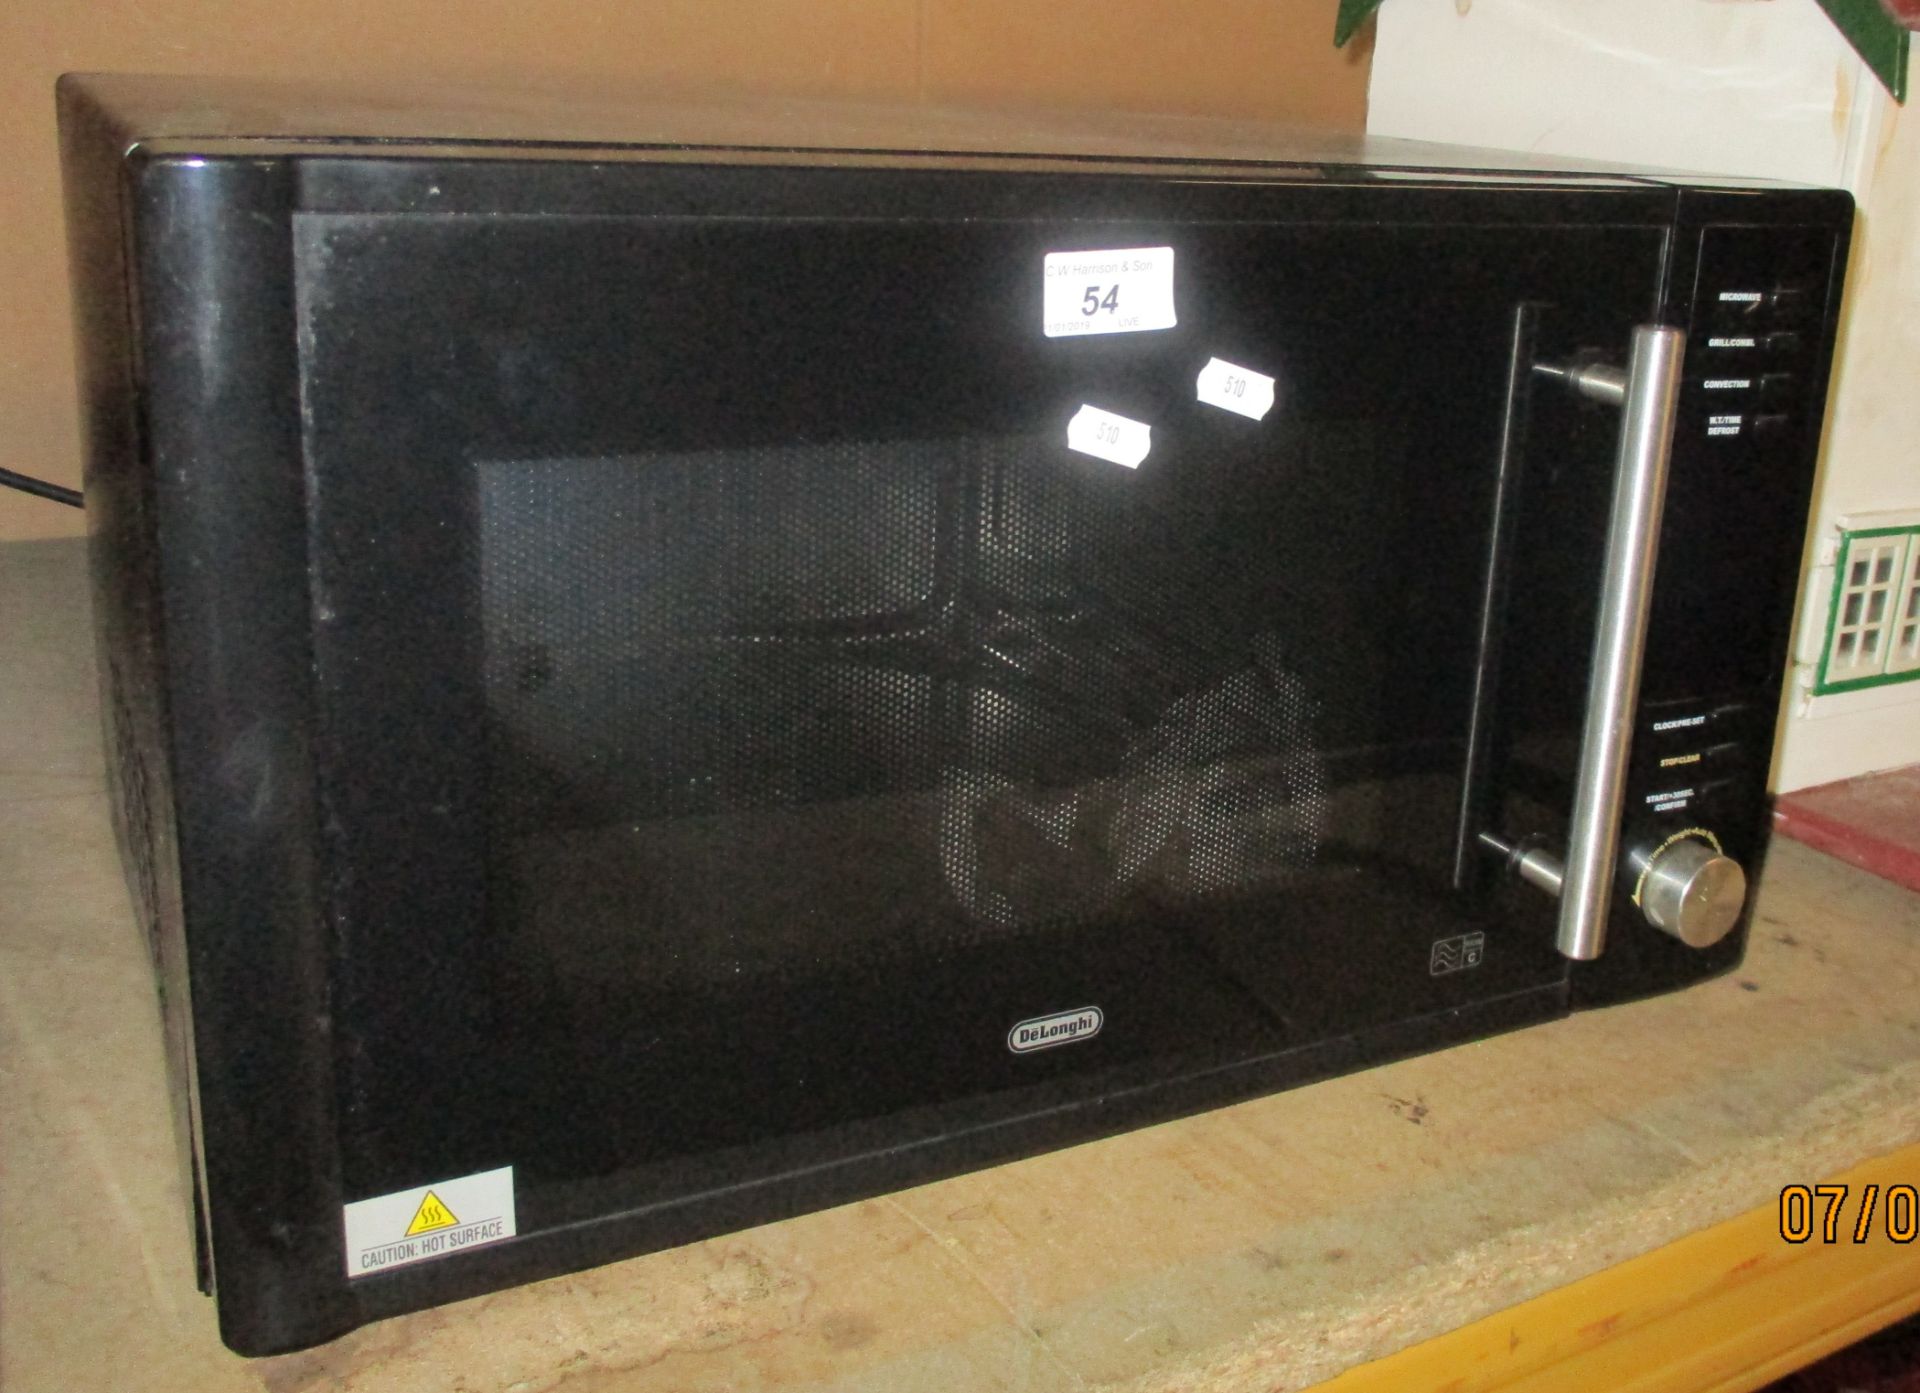 A black Delonghi microwave oven